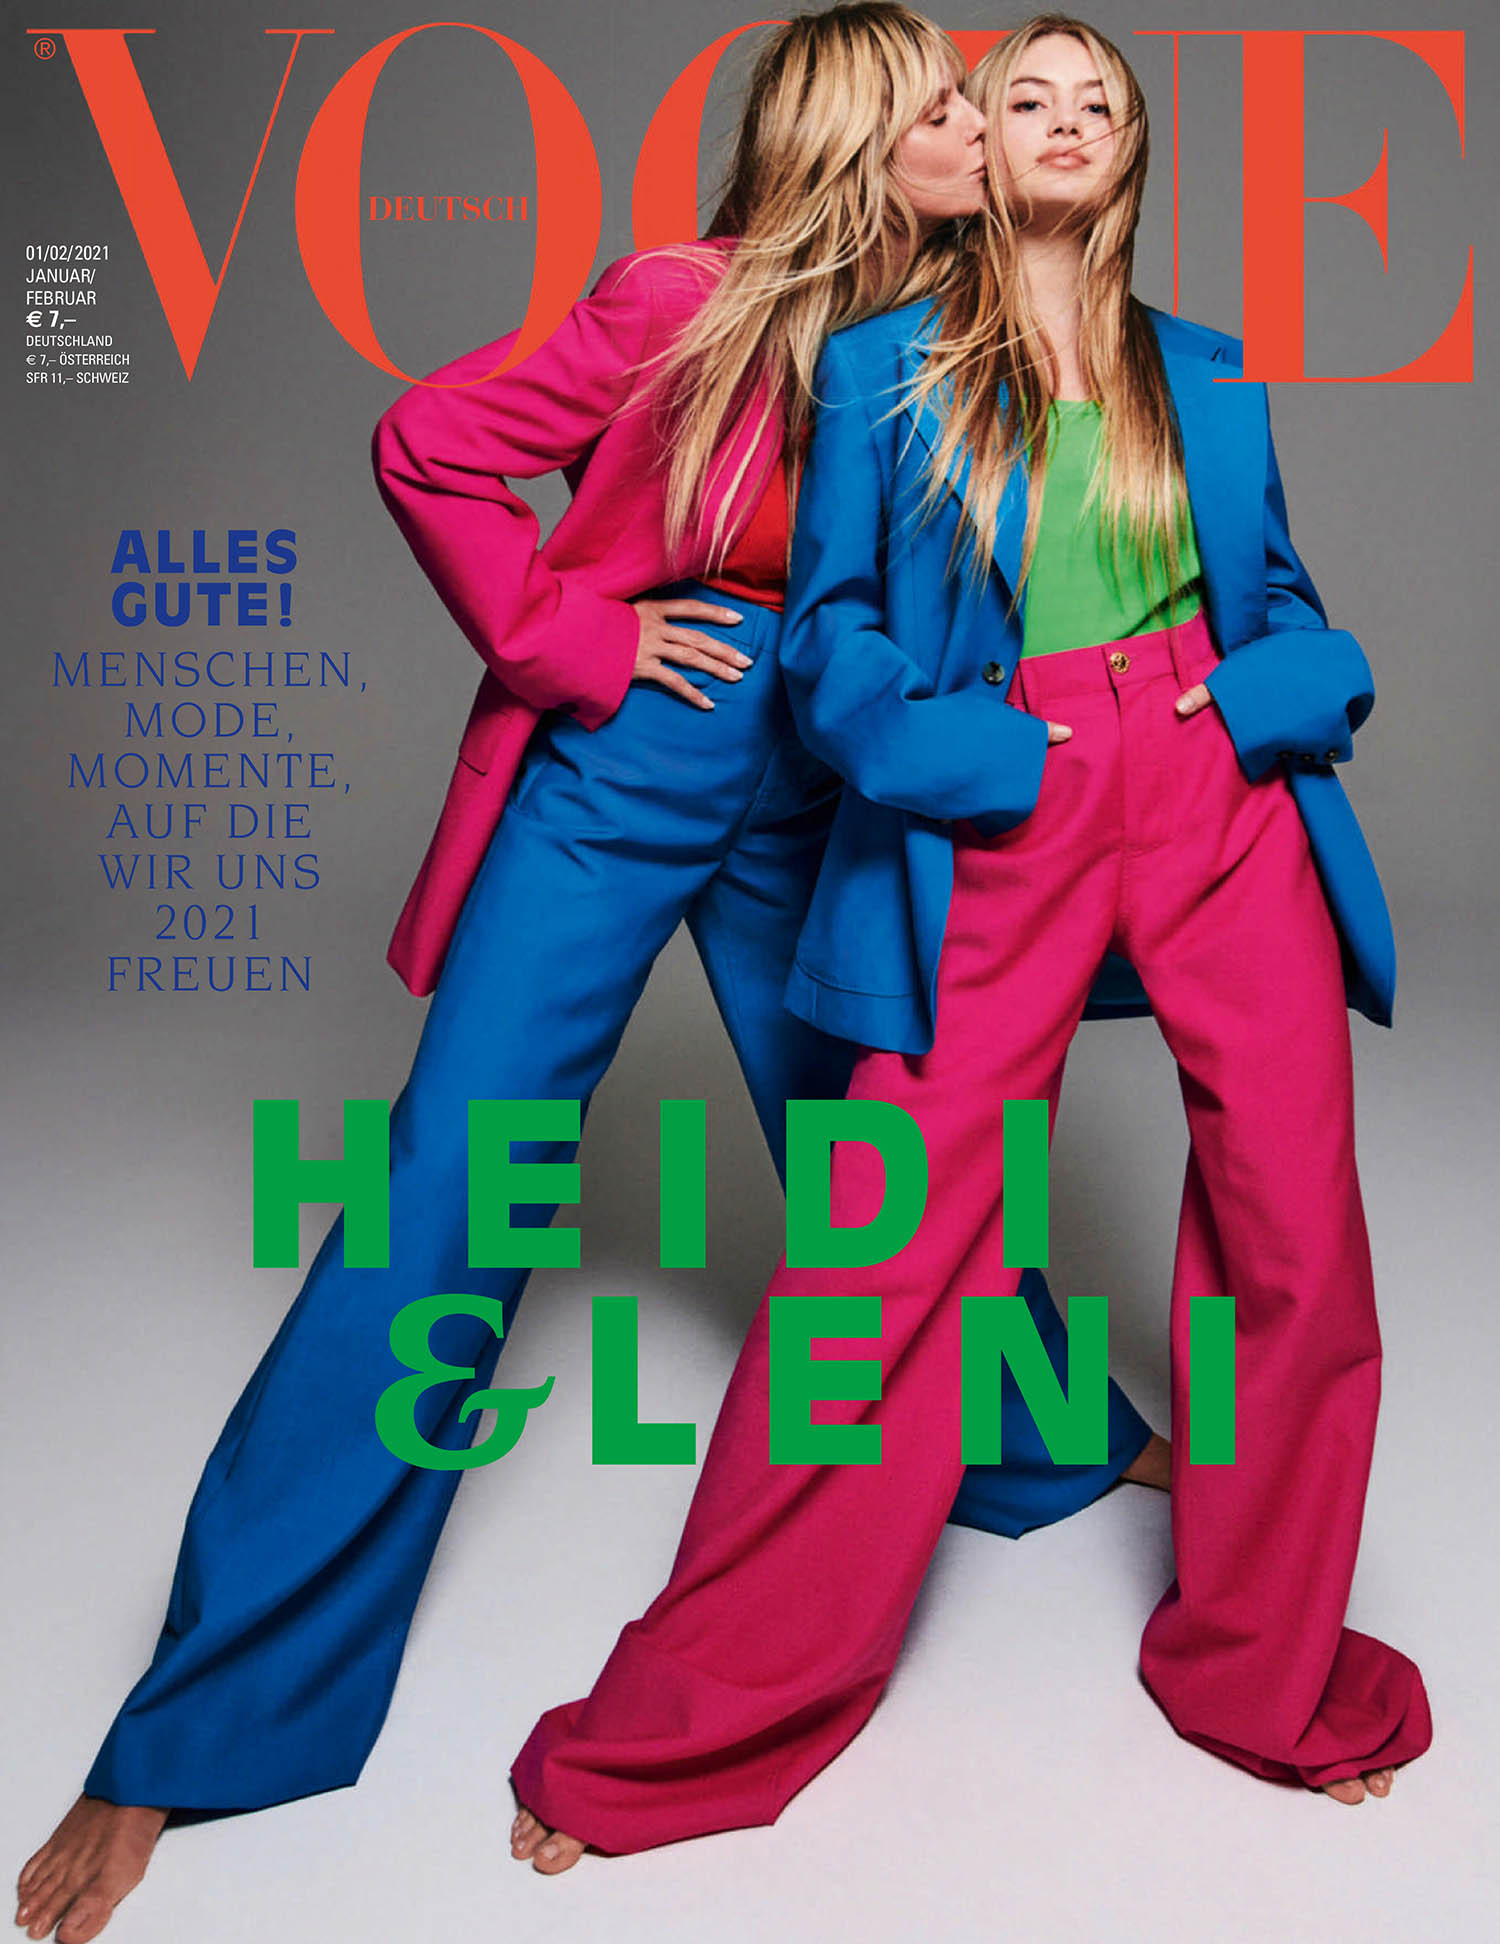 Heidi Klum and Leni Klum cover Vogue Germany January February 2021 by Chris Colls